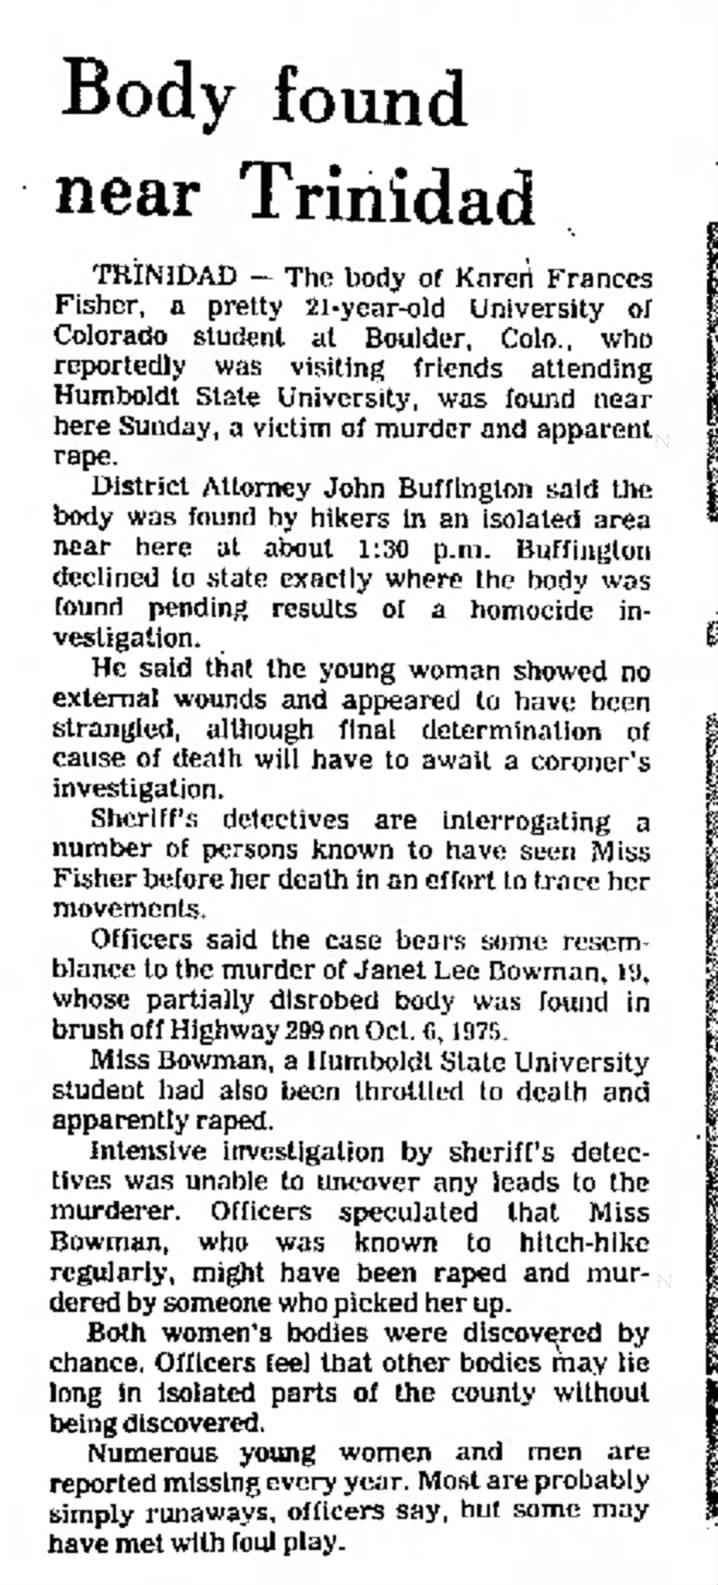 karen frances fisher is found dead, also mention of Janet Lee bowman jan 1976